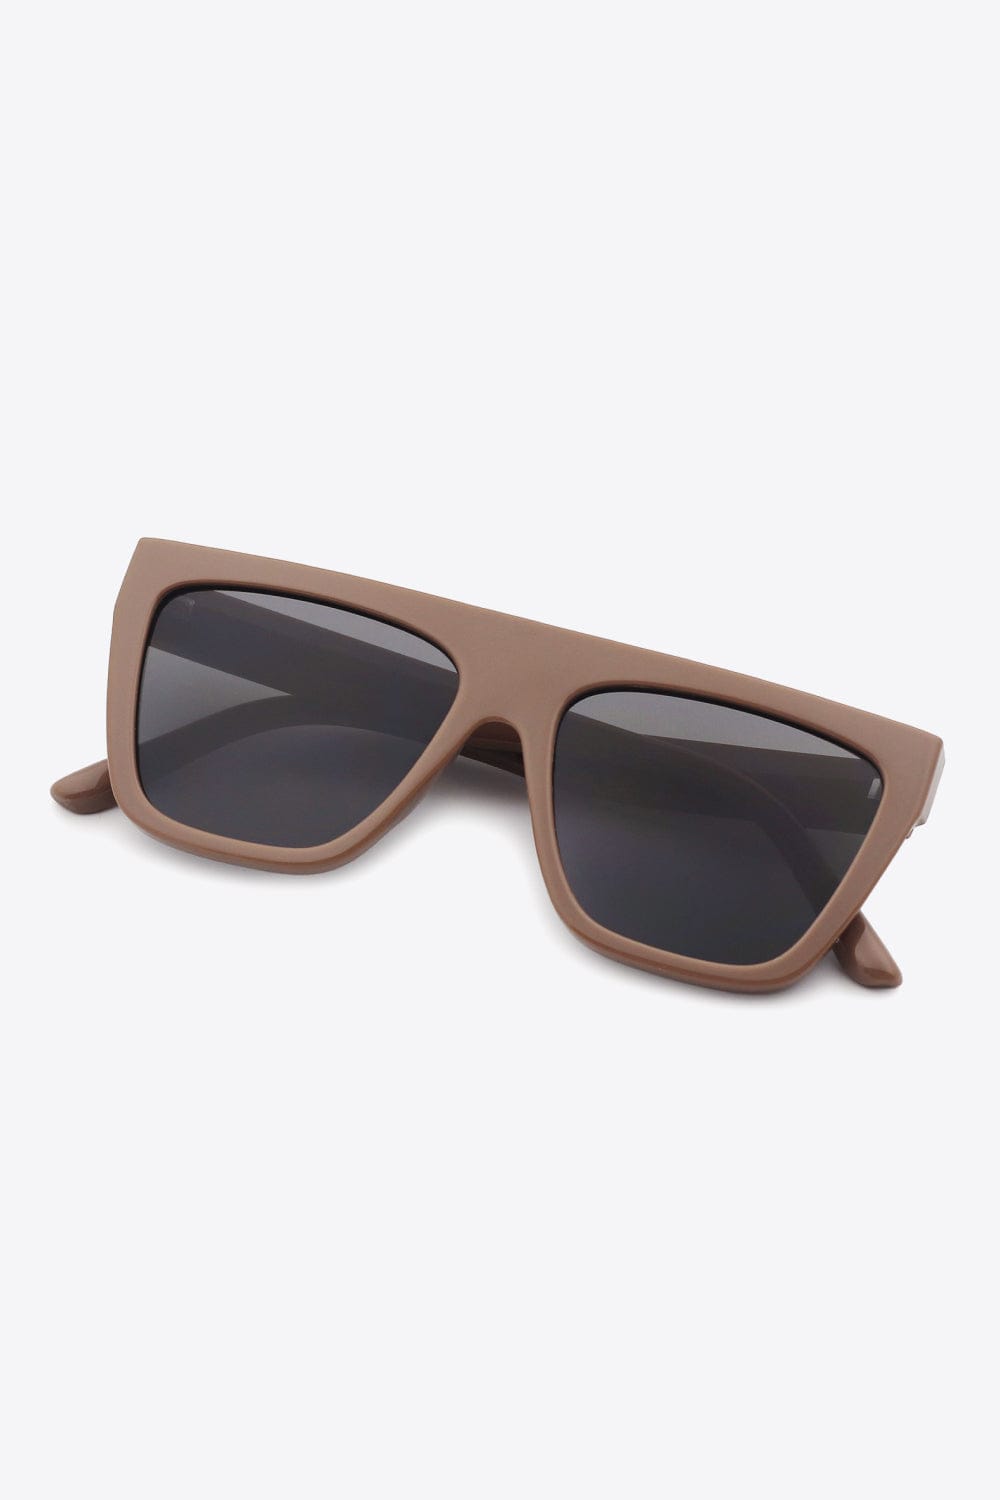 UV400 Polycarbonate Wayfarer Sunglasses - Body By J'ne